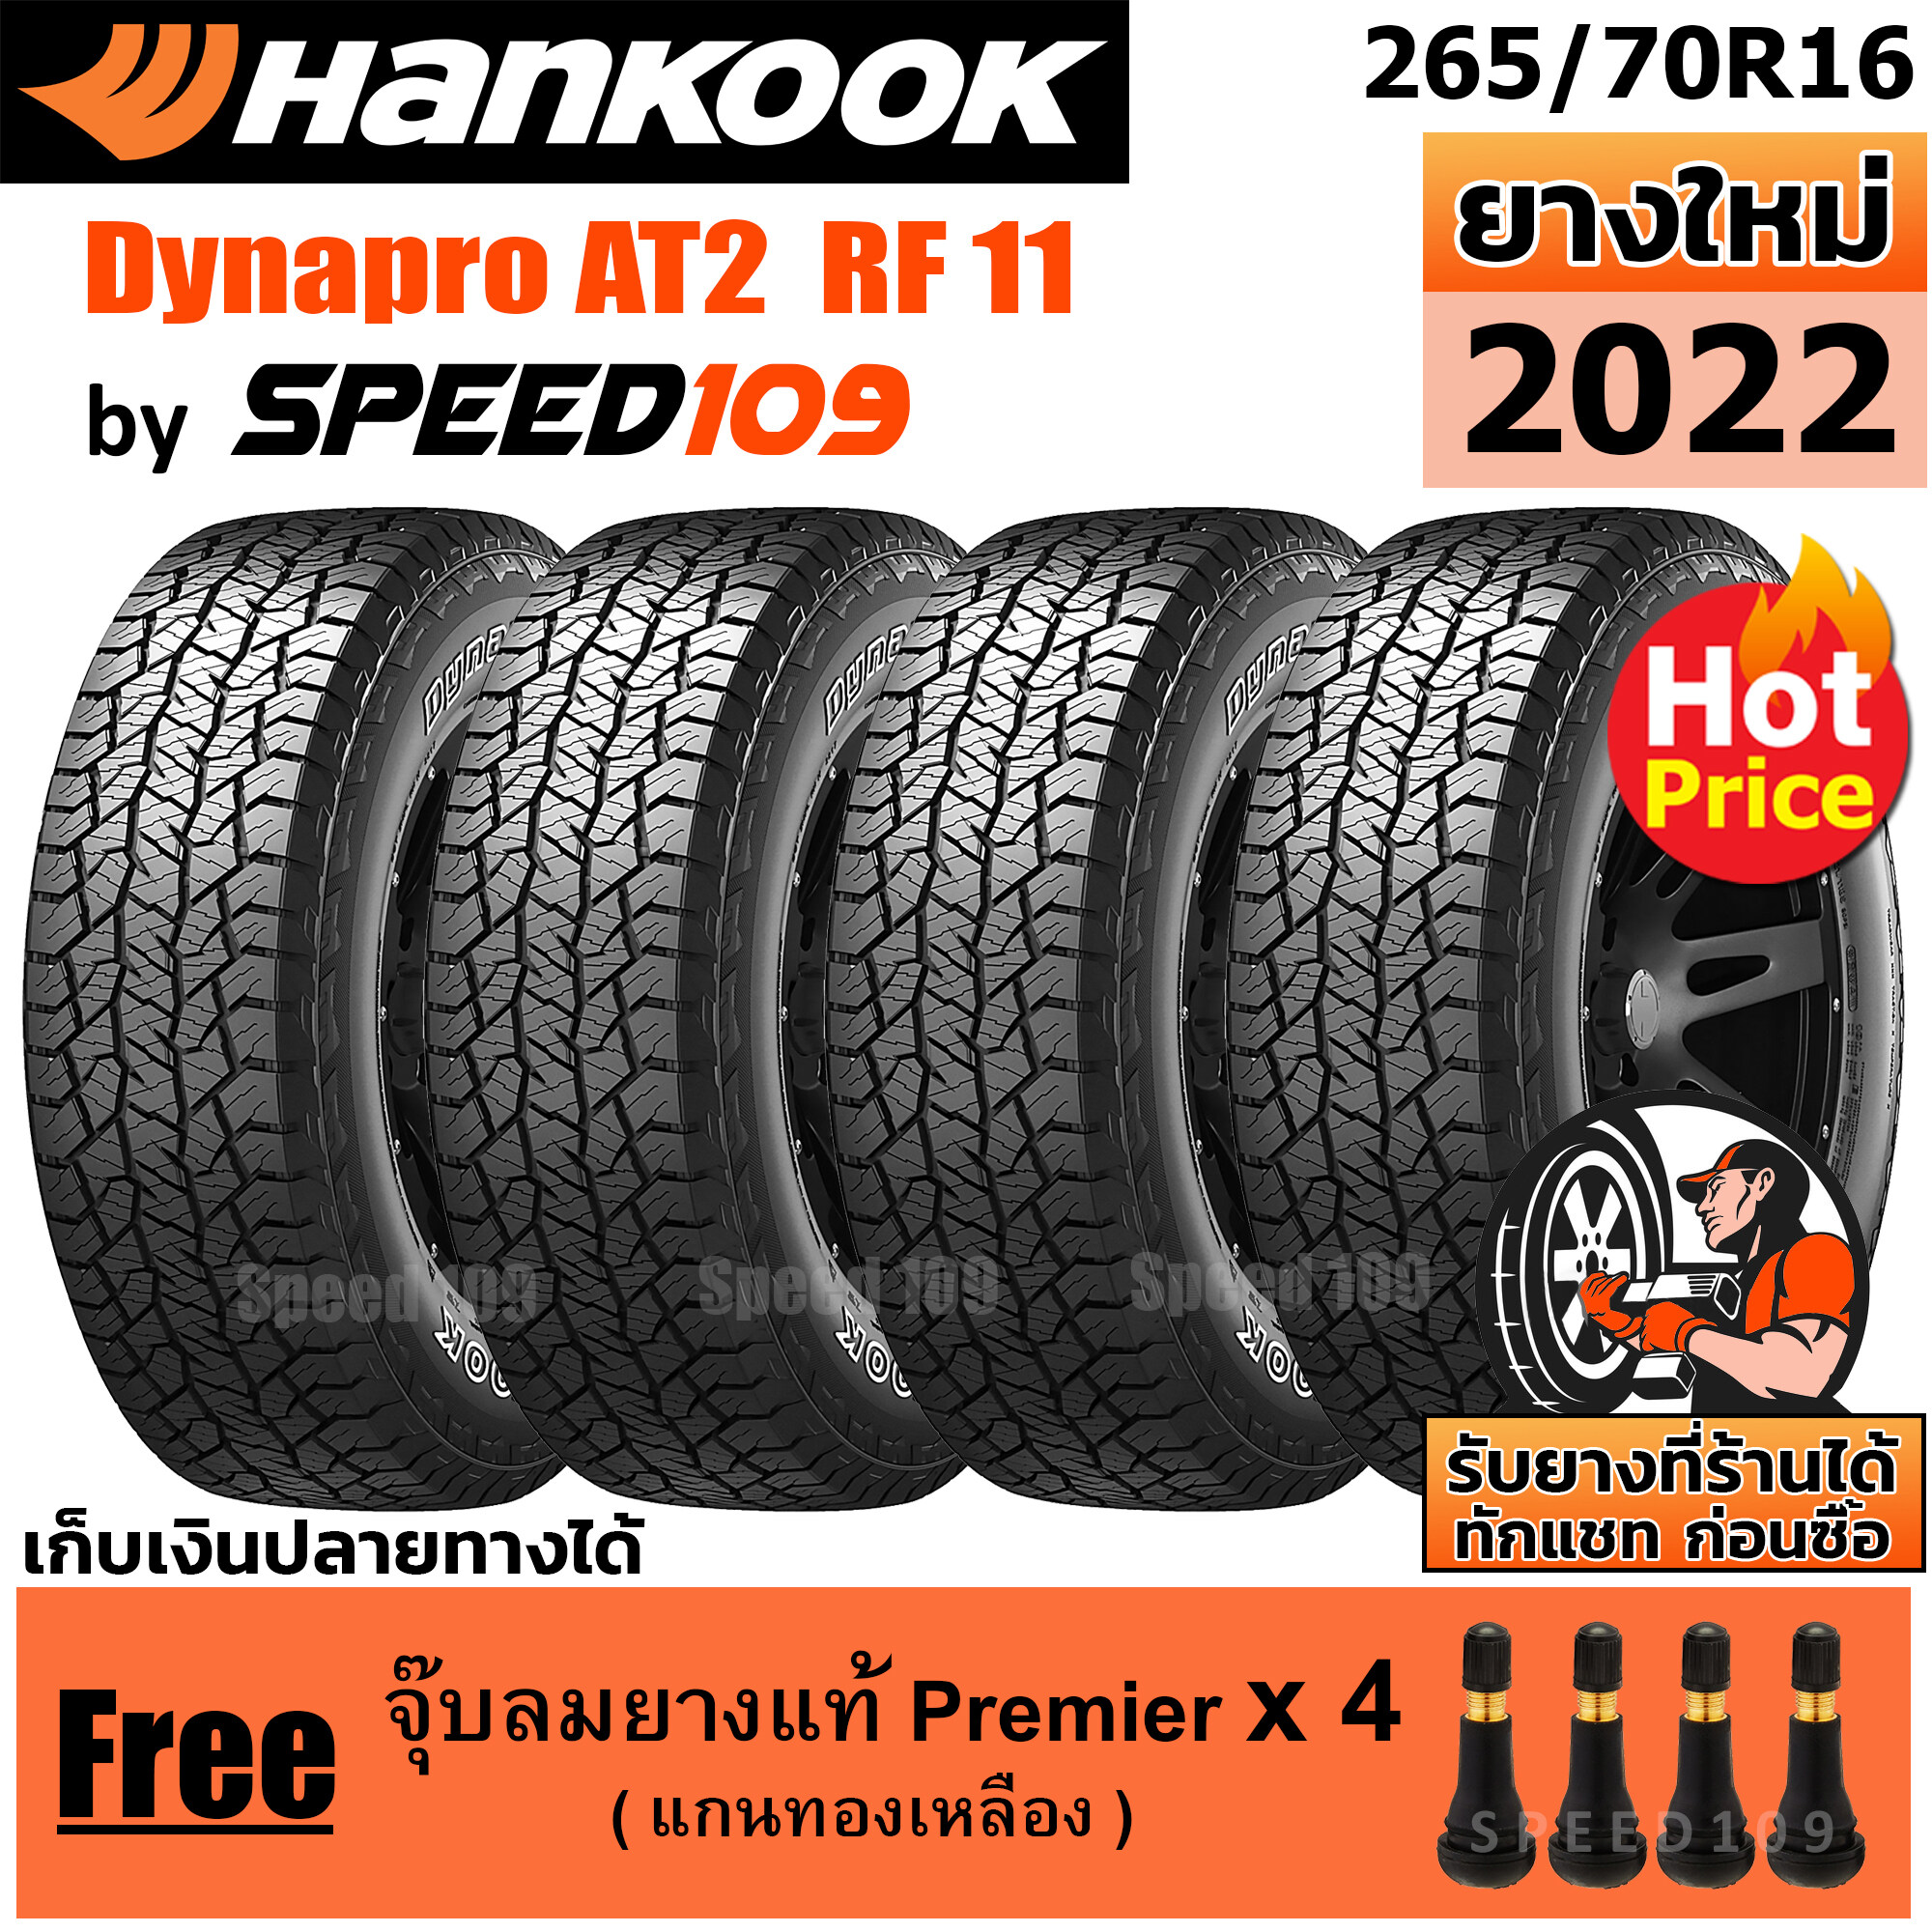 HANKOOK ยางรถยนต์ ขอบ 16 ขนาด 265/70R16 รุ่น Dynapro AT2 RF11 เส้น (ปี  2022)